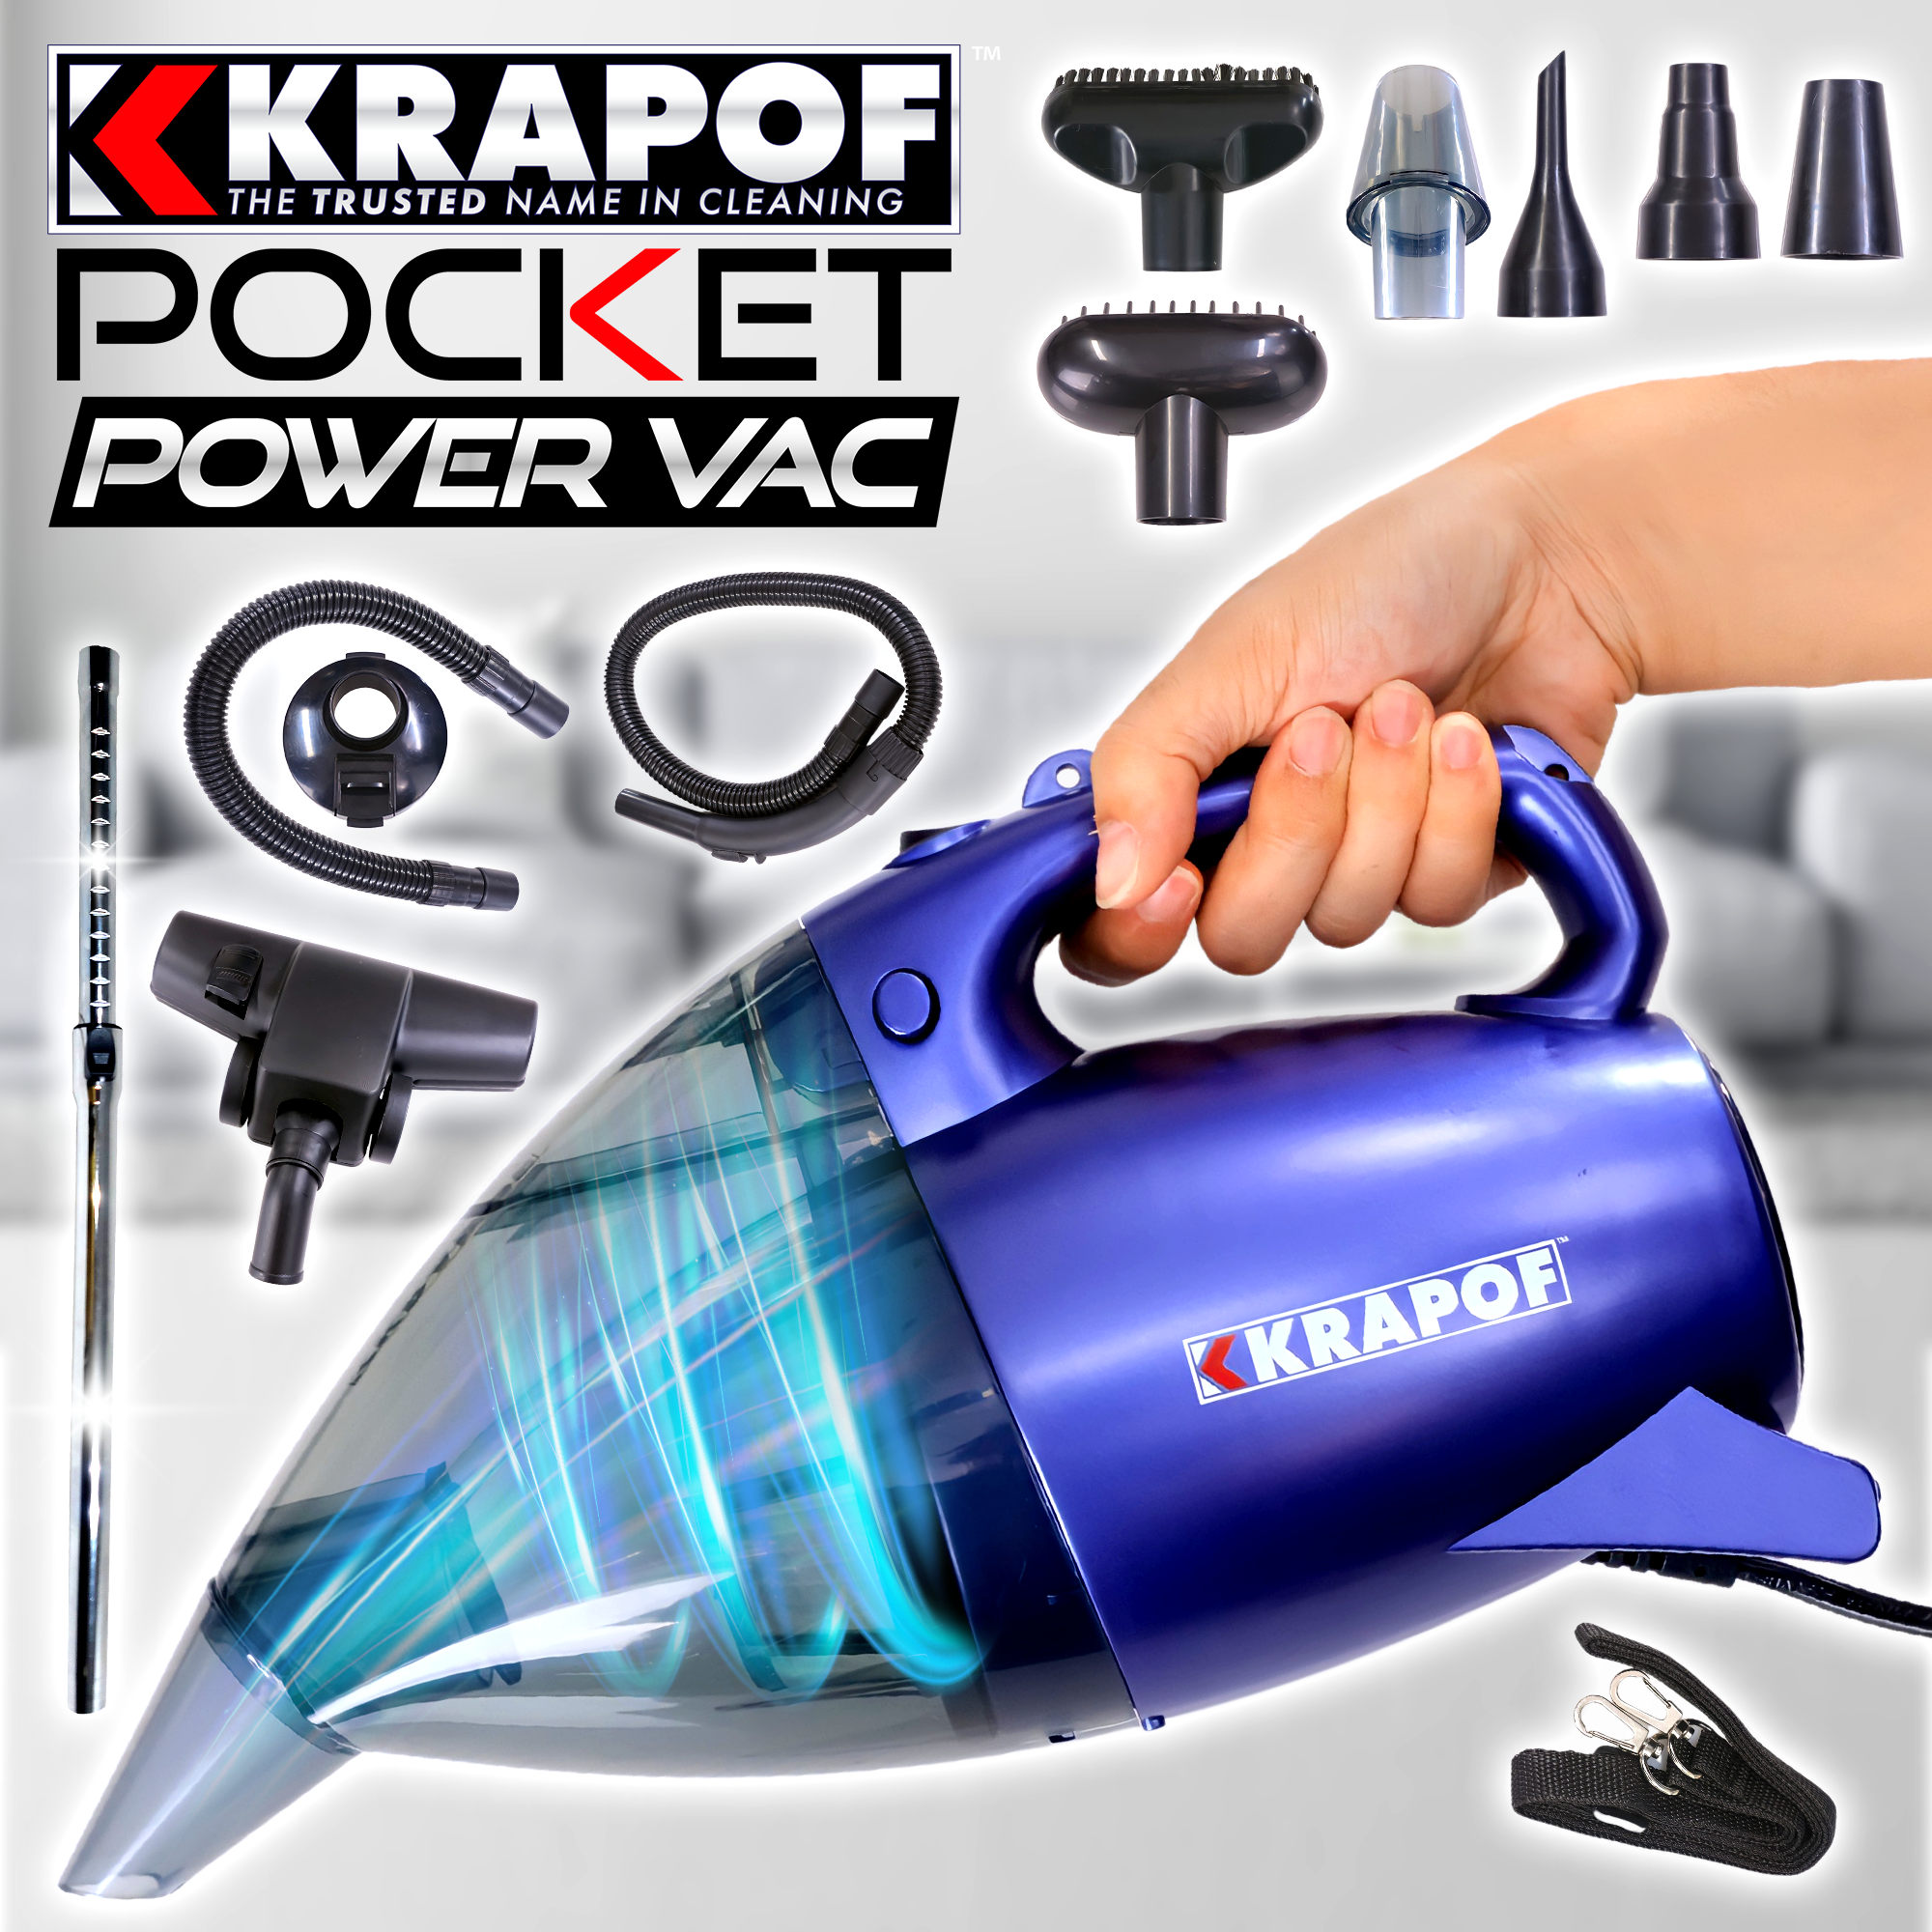 KRAPOF® Pocket Power Vac: The 2 in 1 Compact Powerful Vacuum and Blower + 4x BONUS Storage Bags